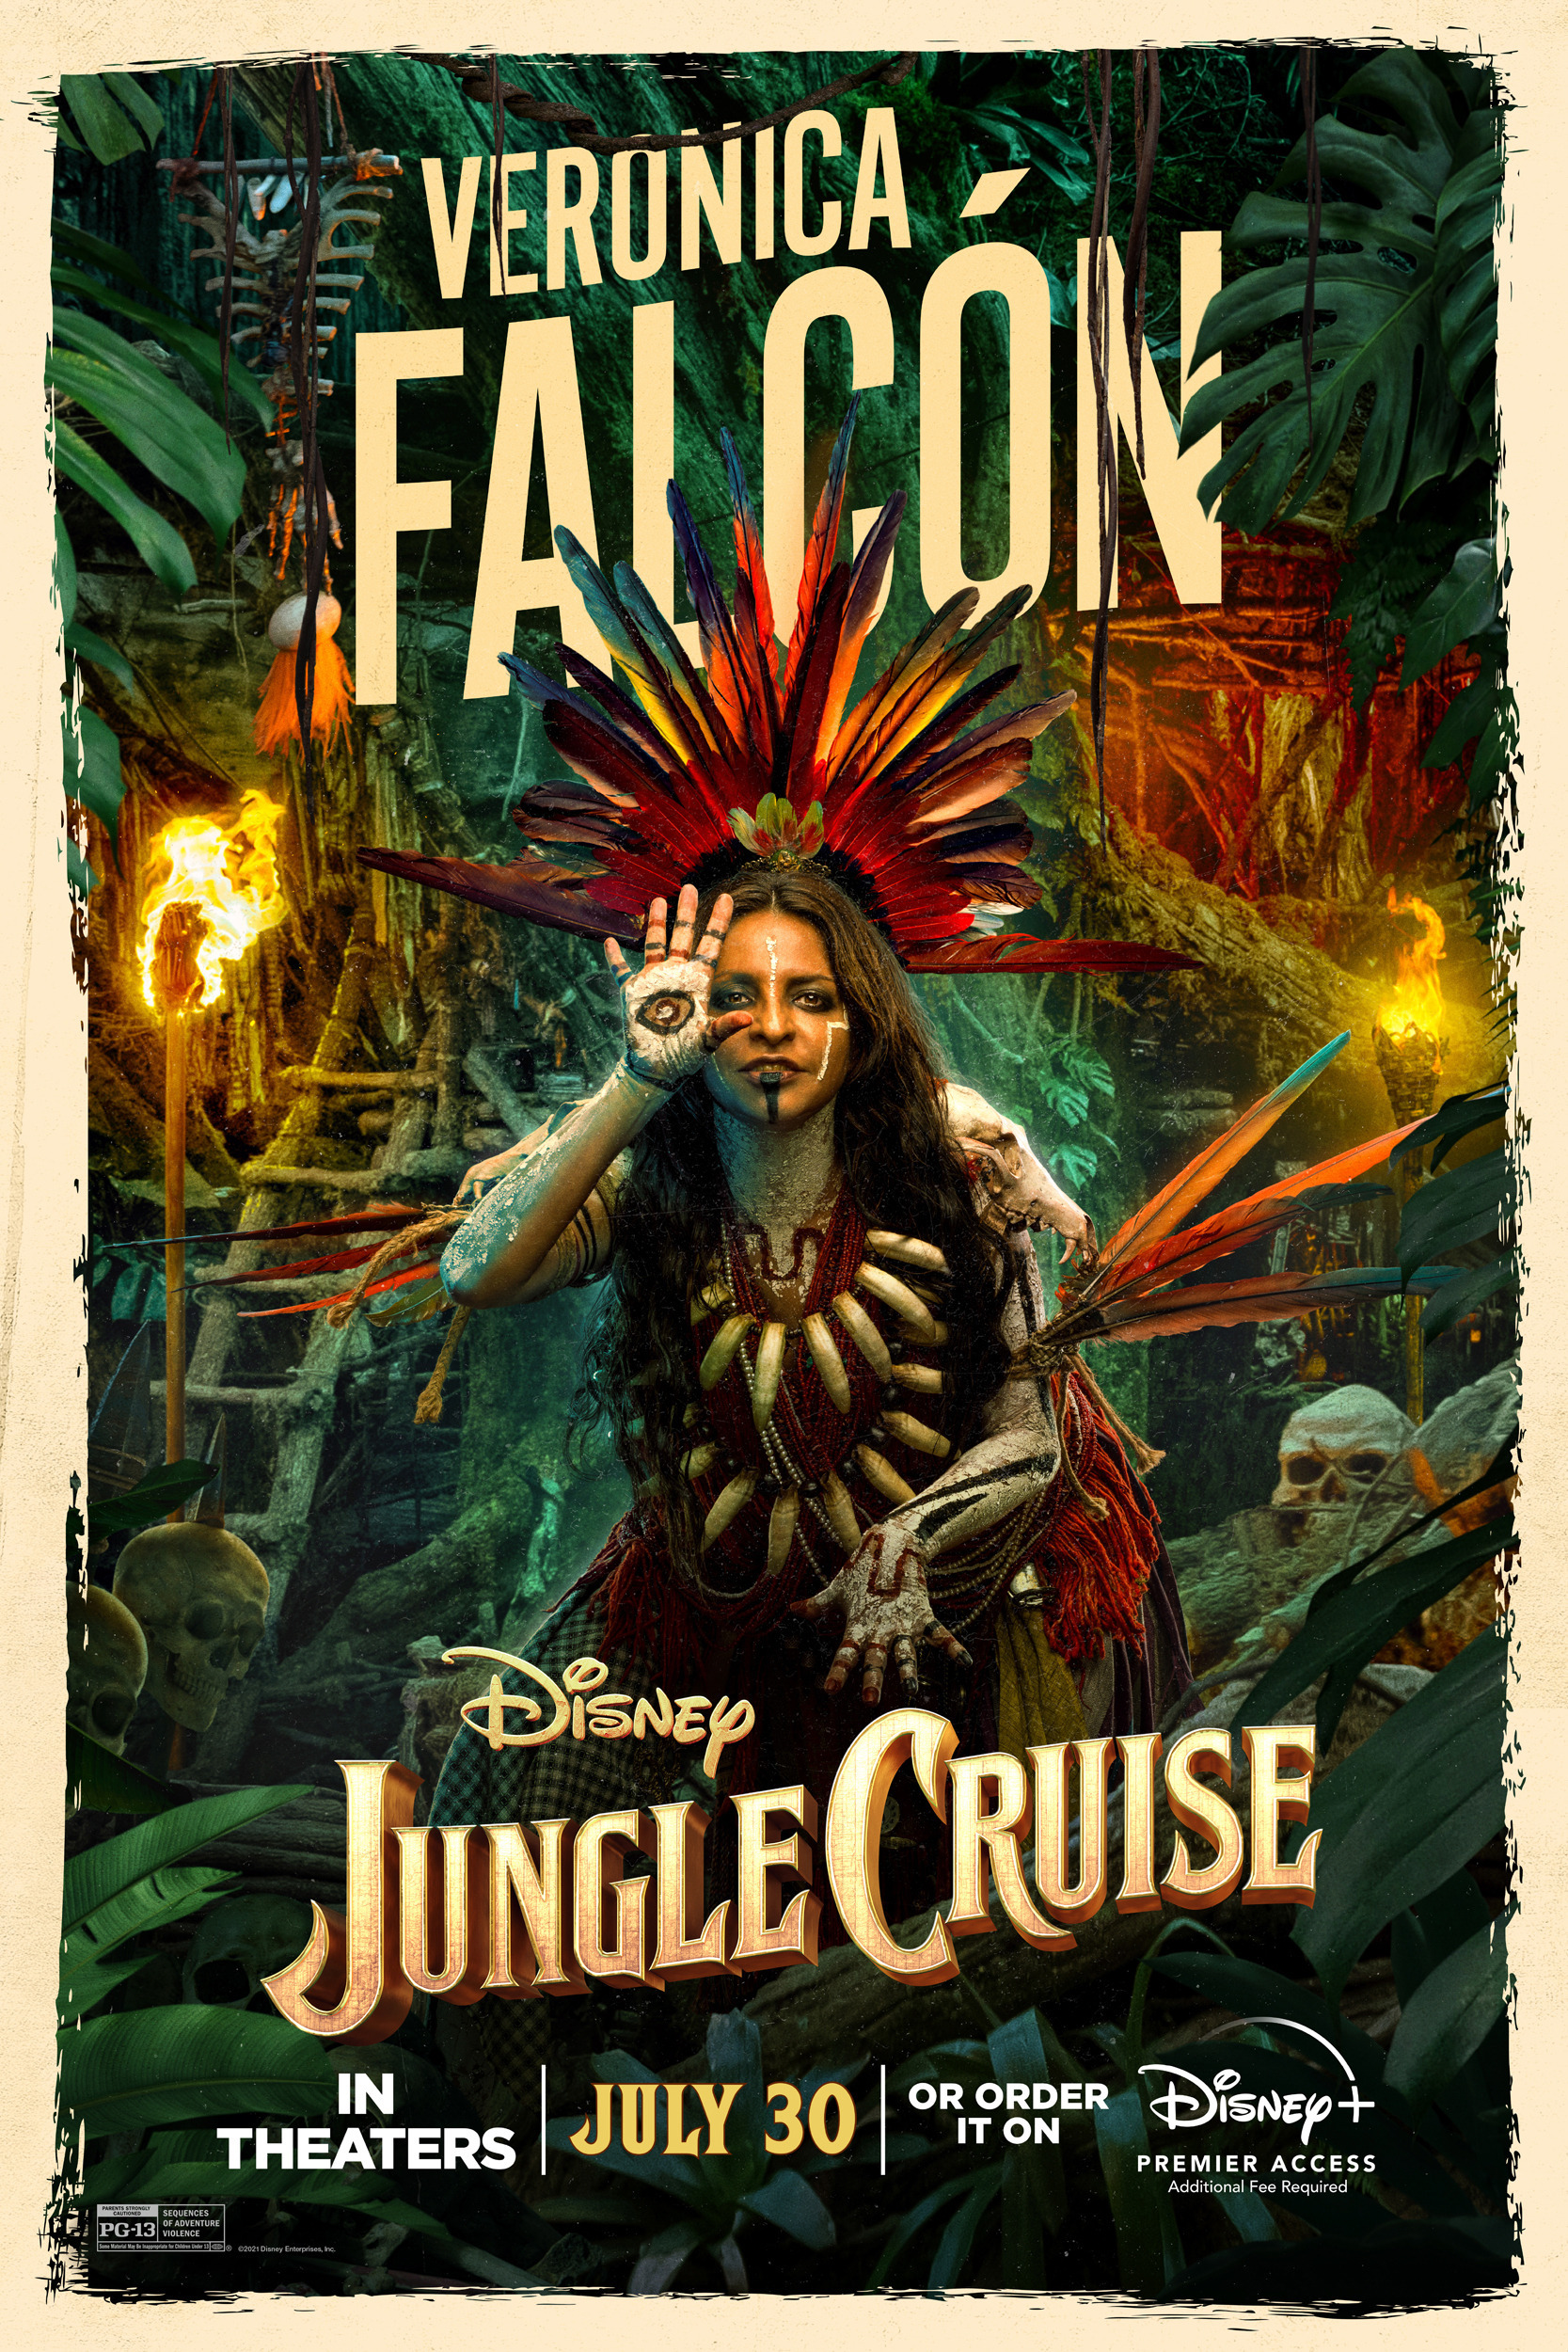 Mega Sized Movie Poster Image for Jungle Cruise (#26 of 26)